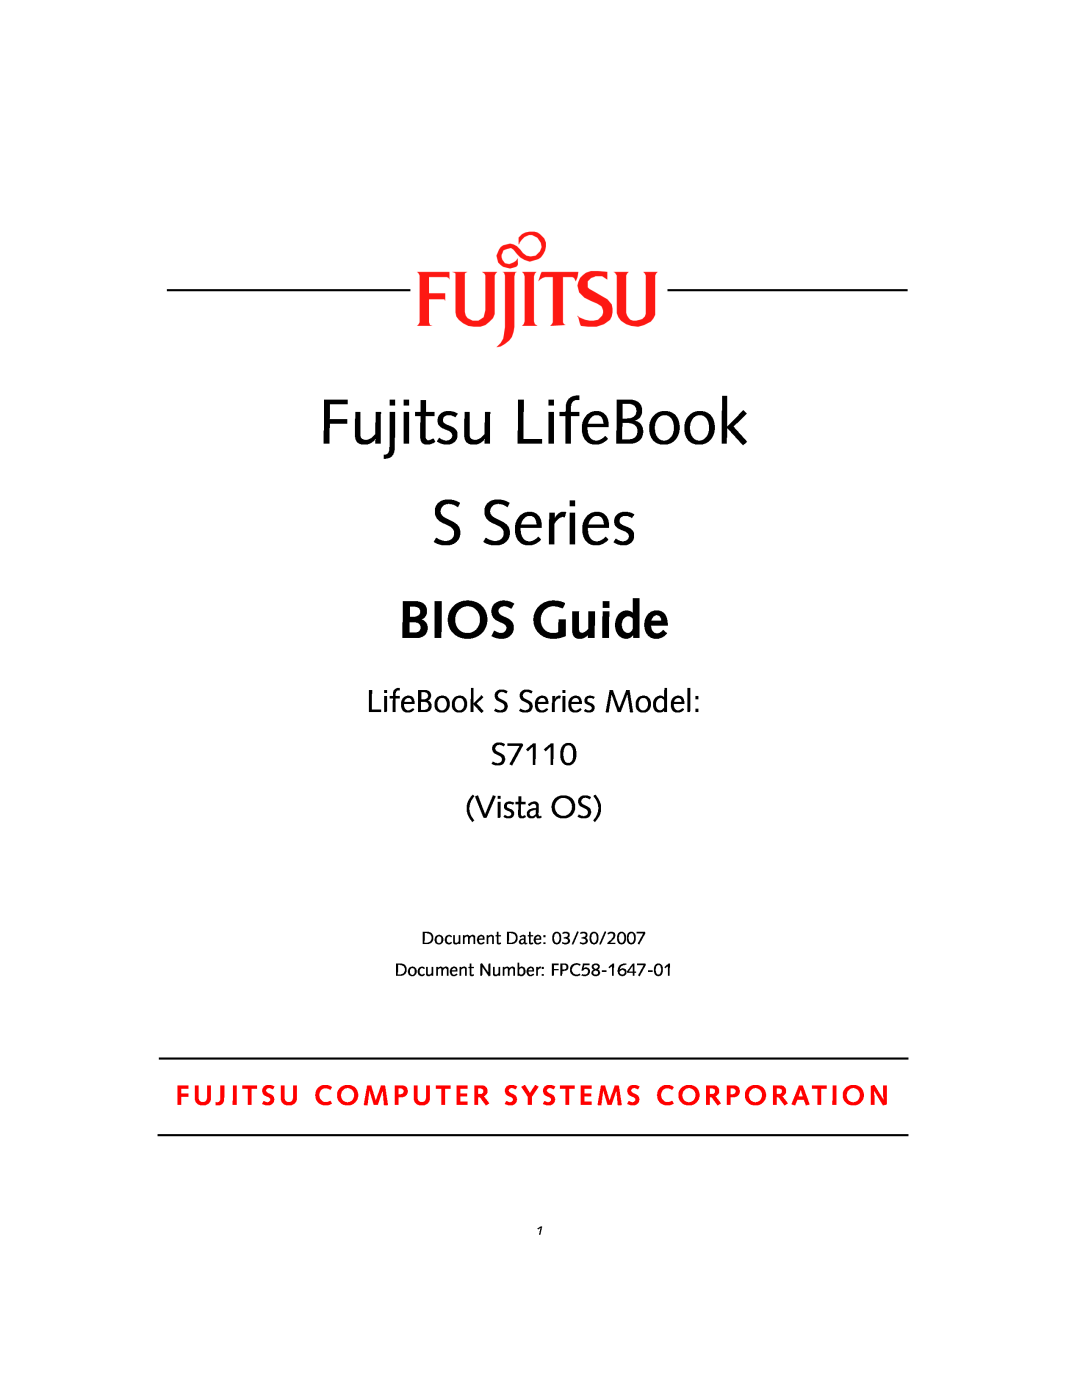 Fujitsu Siemens Computers manual Fujitsu LifeBook S Series, BIOS Guide, LifeBook S Series Model S7110 Vista OS 